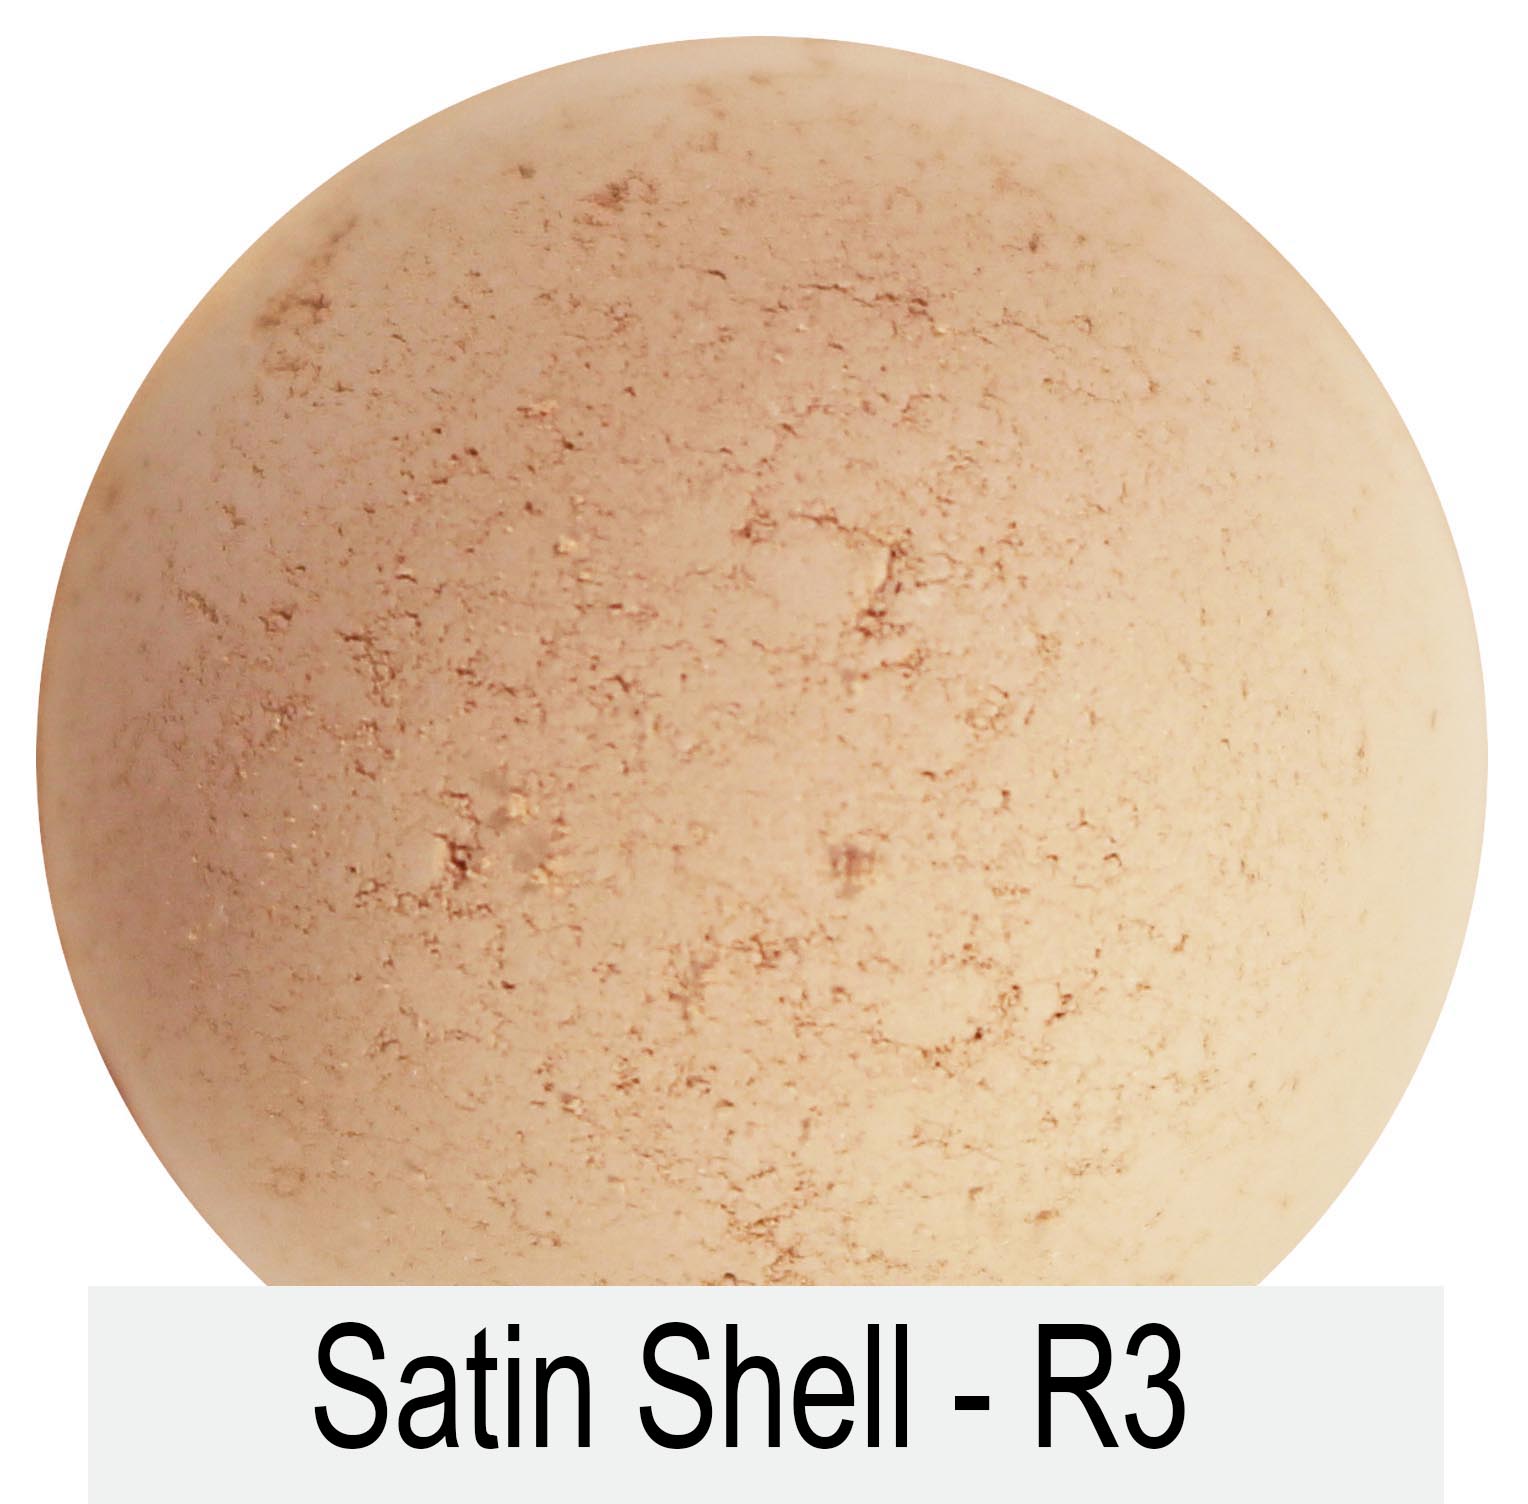 Foundation R3 - Satin Shell, 5g